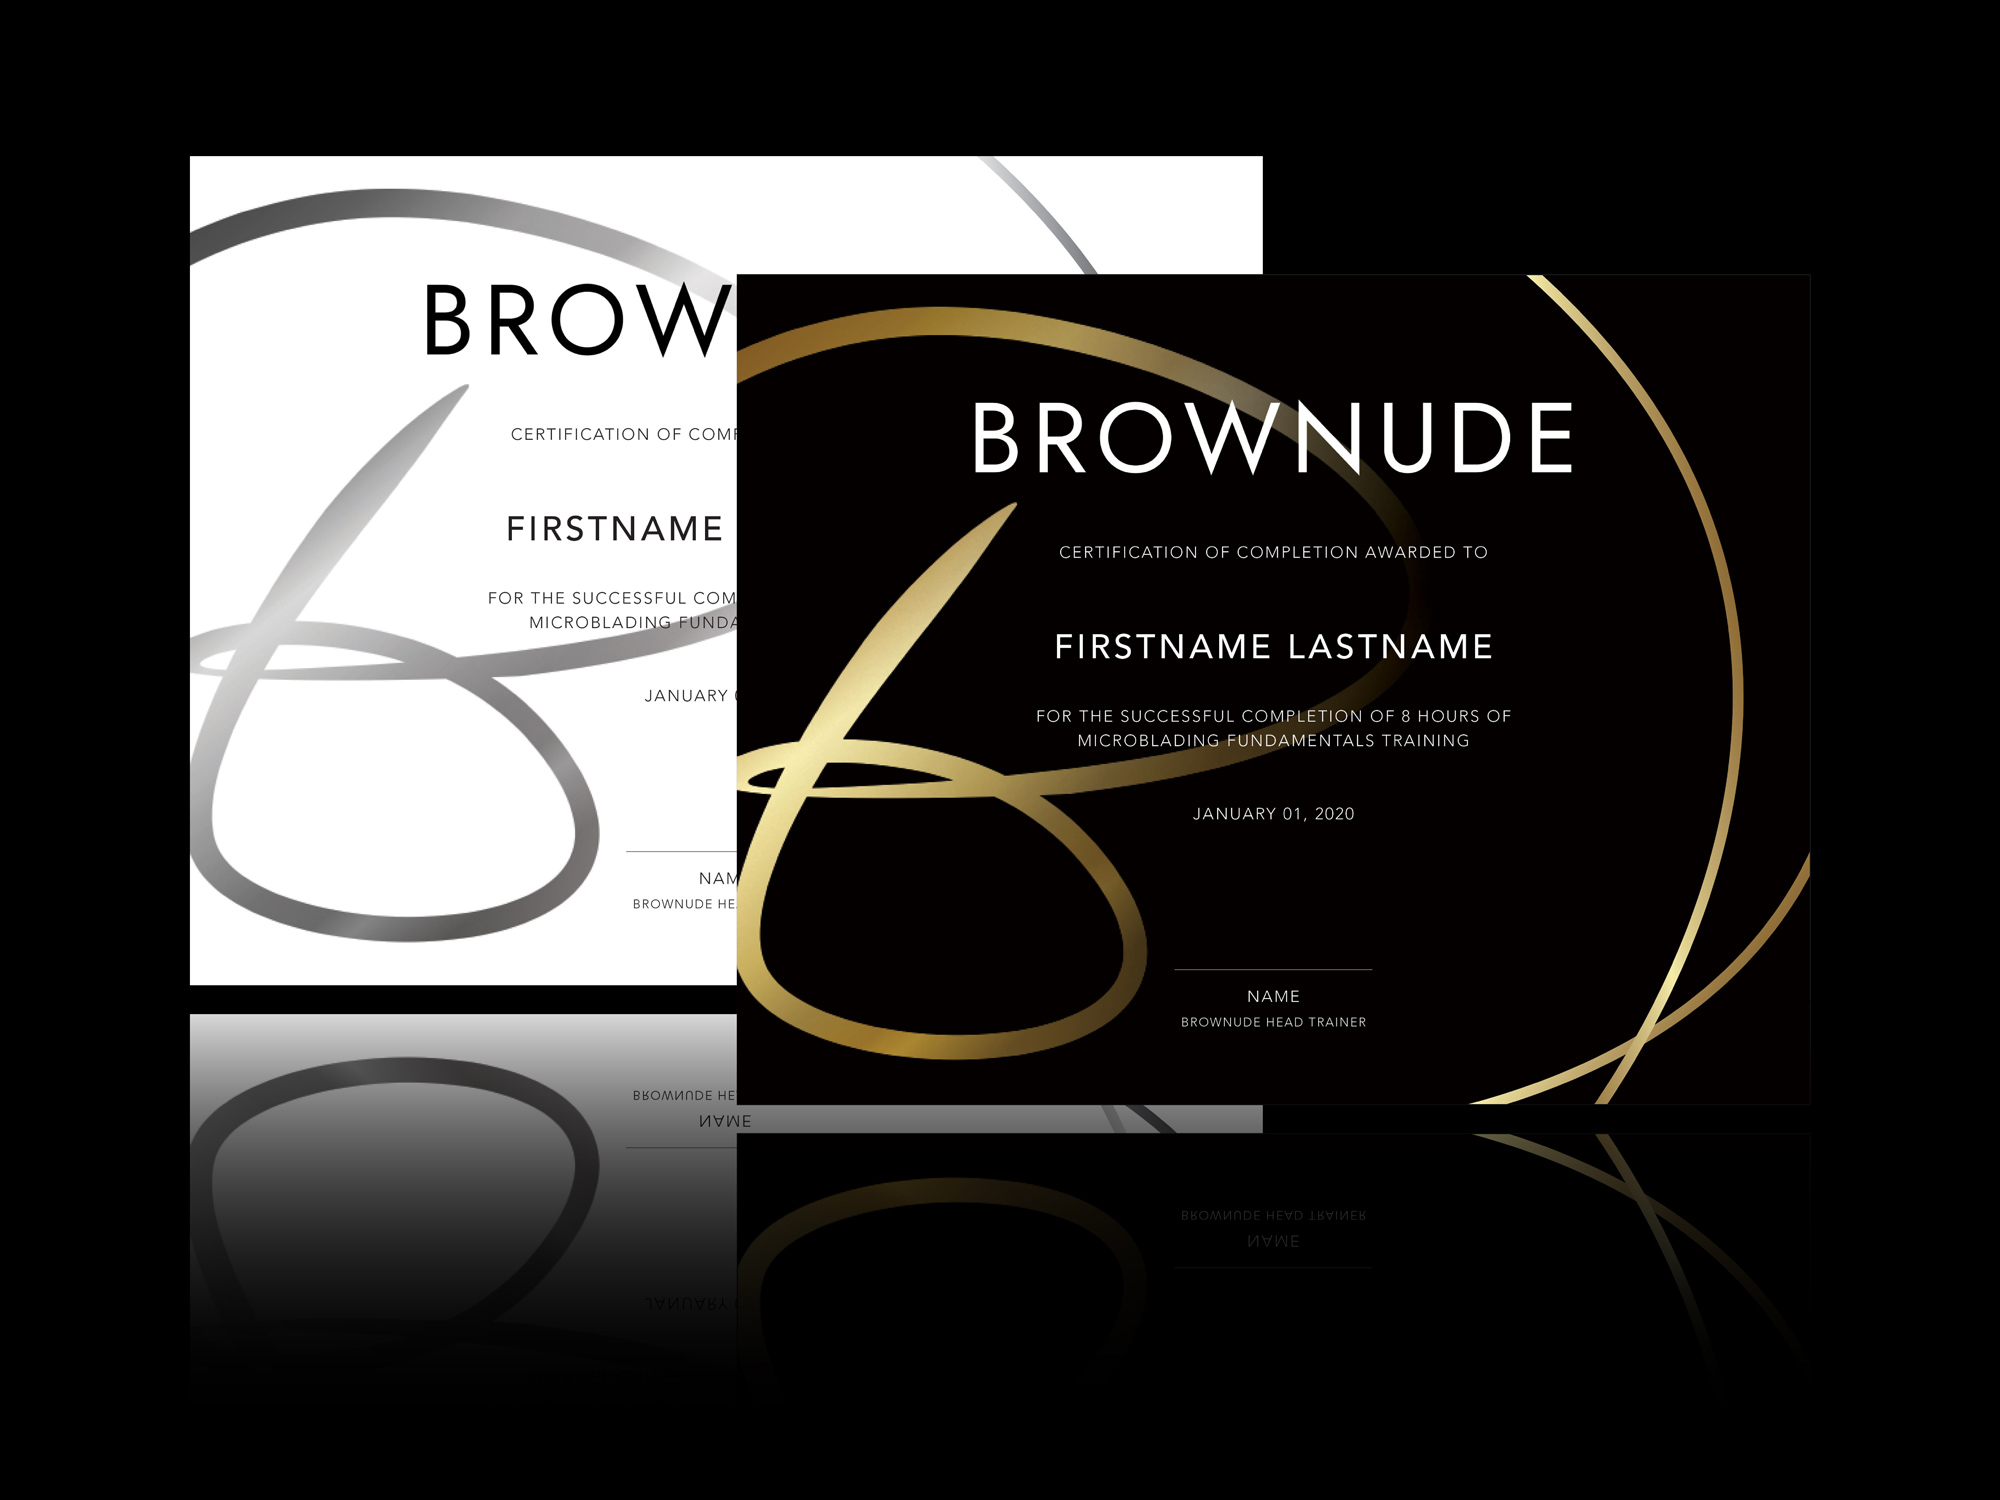 Brownude Certificates - Dark & Light Versions